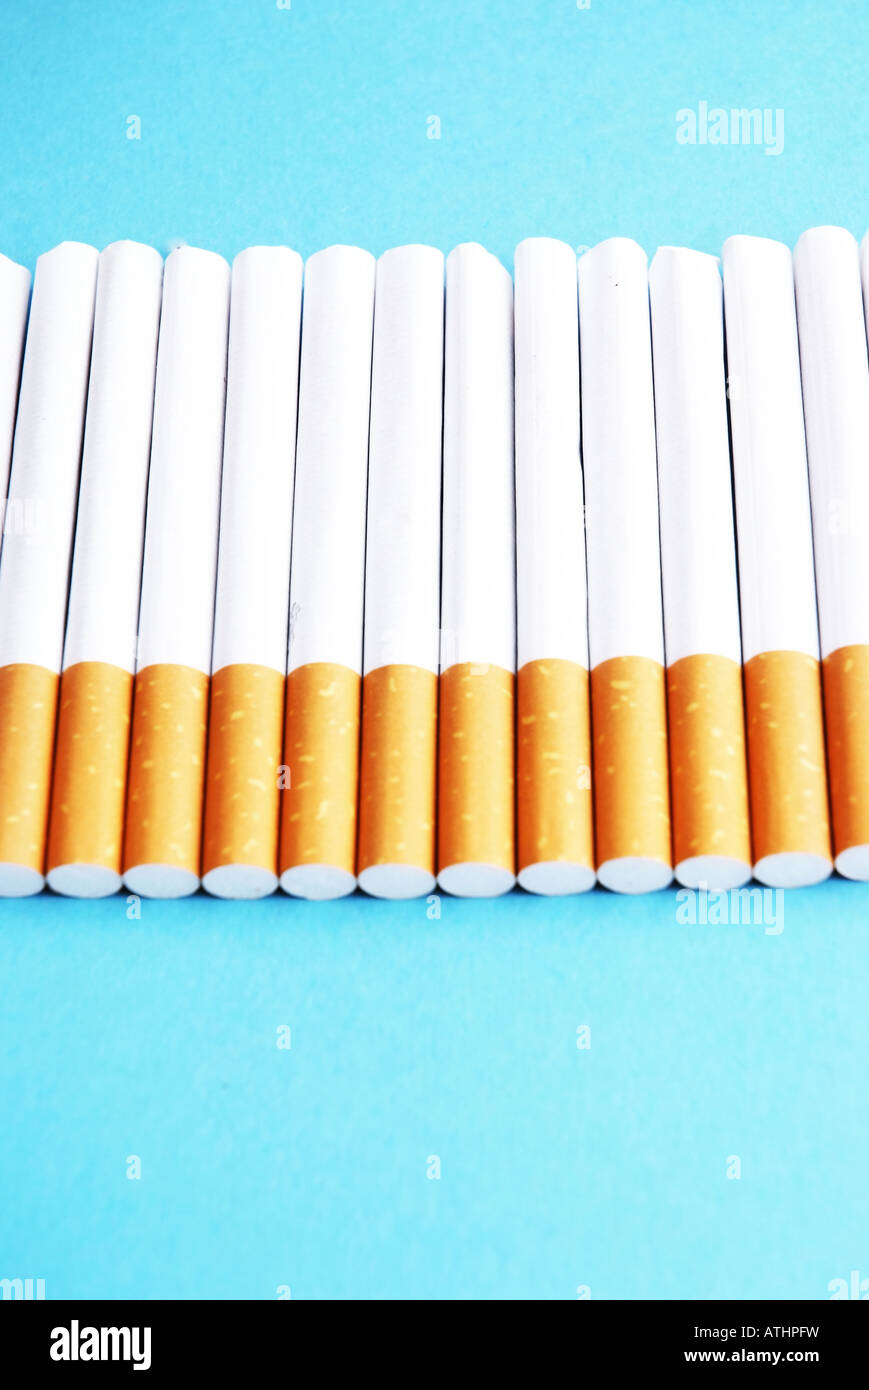 Sigarette Zigaretten Foto Stock